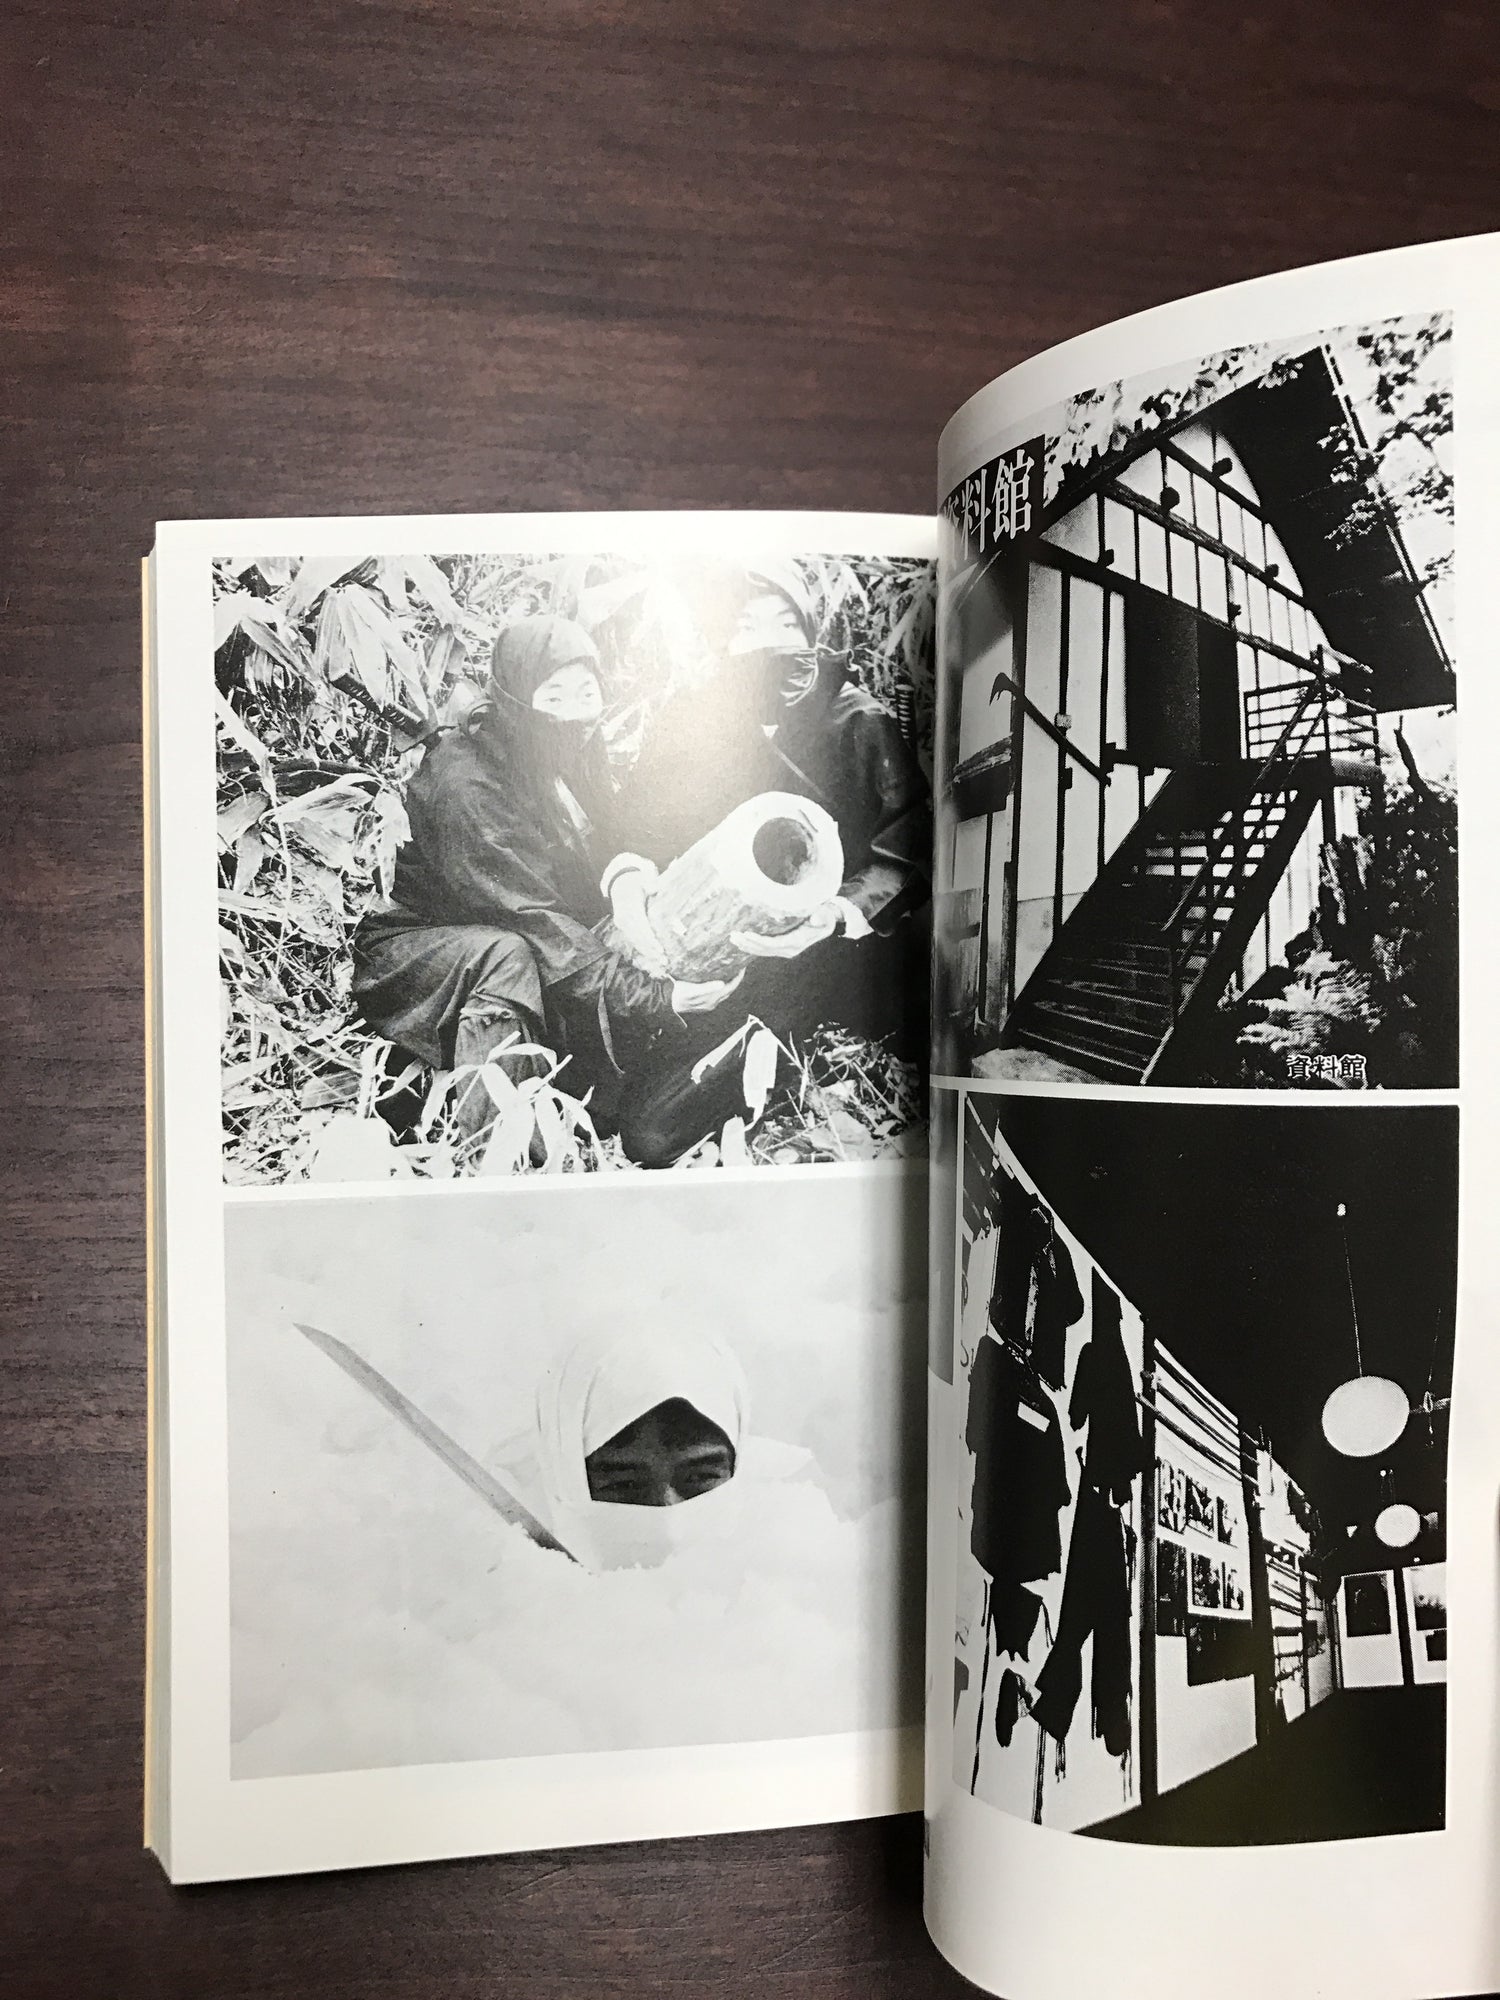 Togakure no Ninja Book by Torazo Shimizu (Preowned) - Budovideos Inc